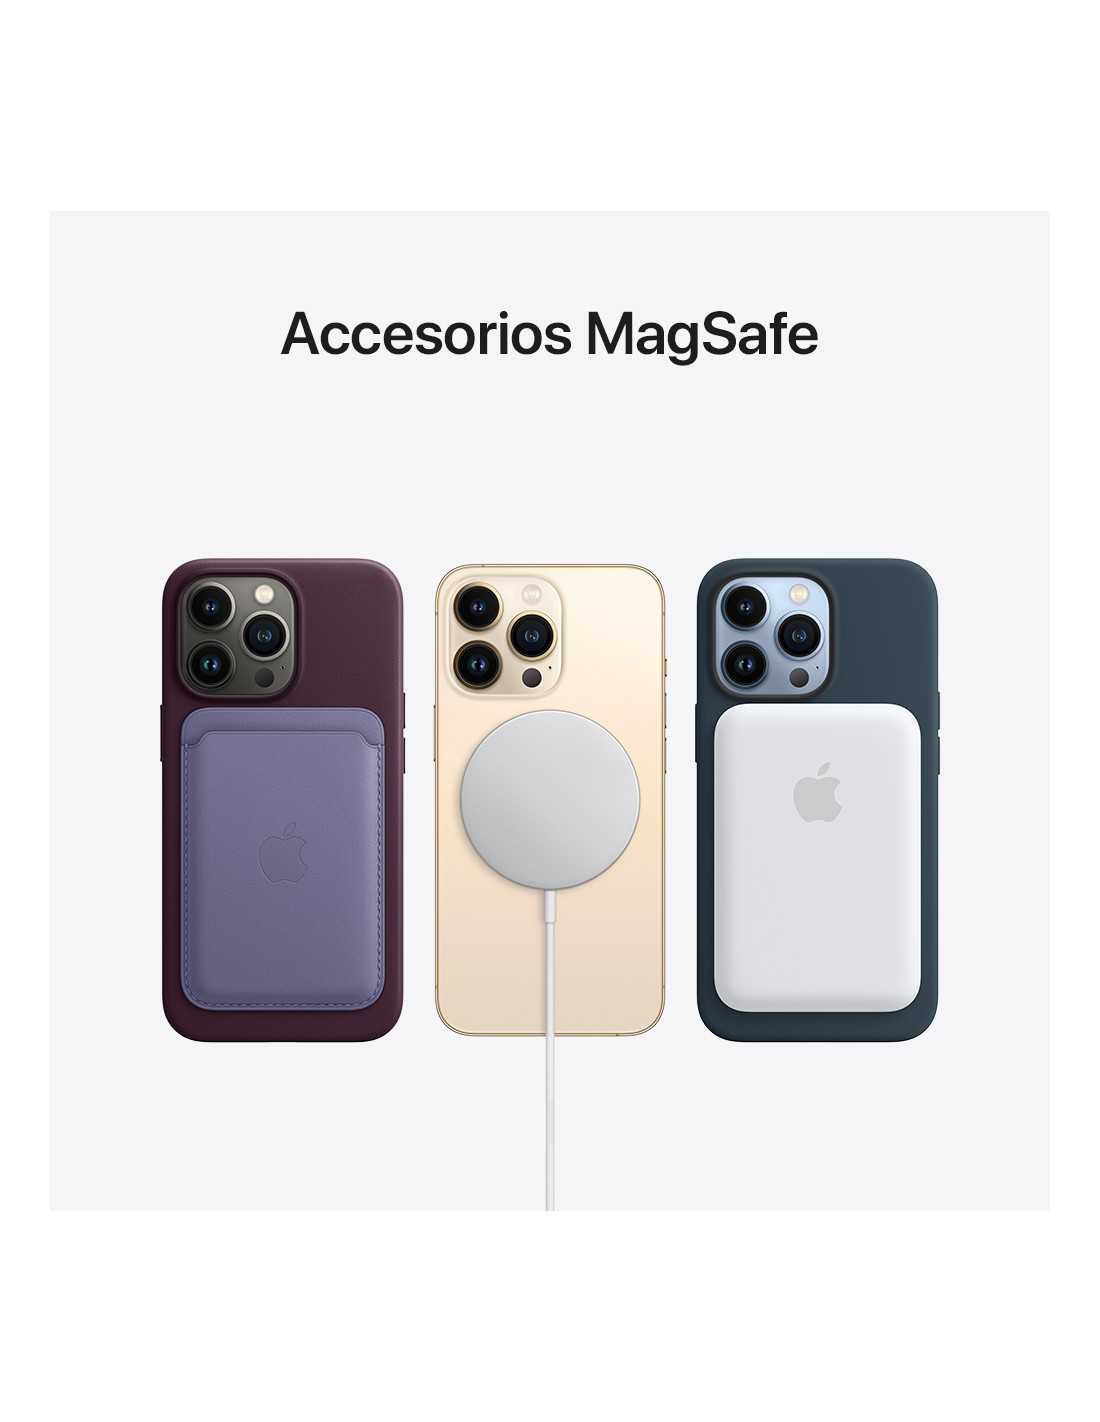 Cartera MagSafe para iPhone - Comprar en Ghost Store